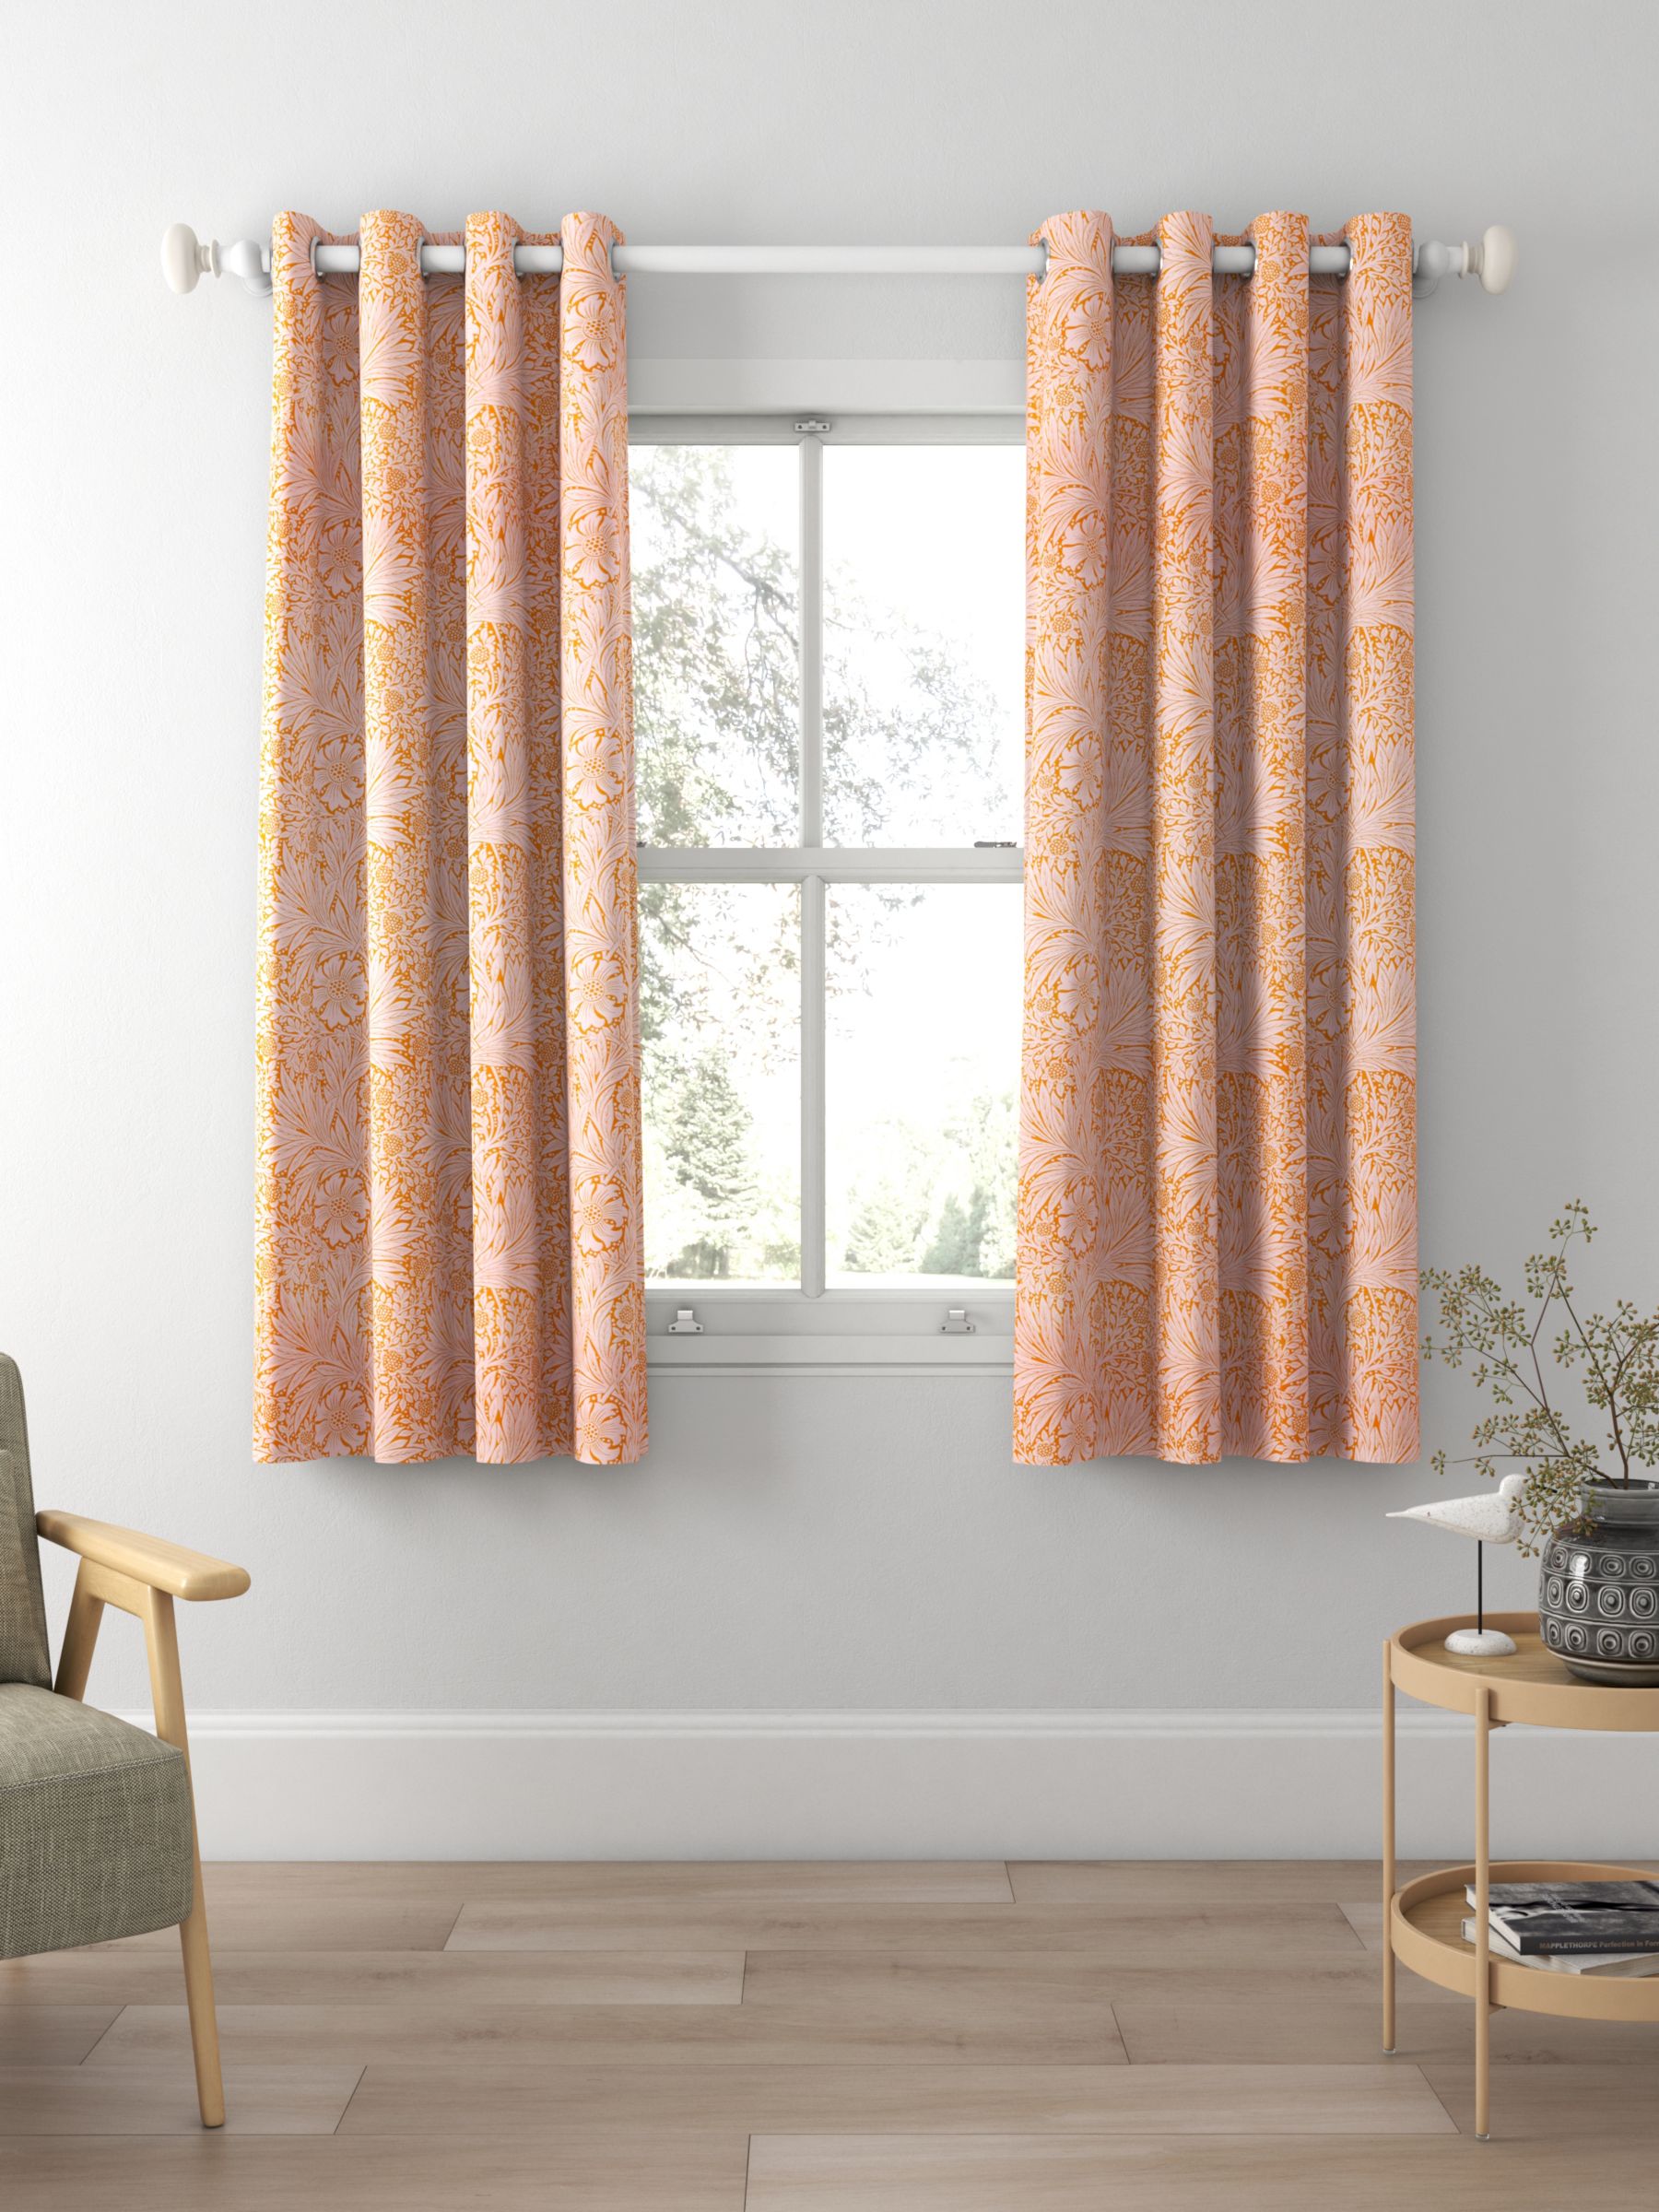 Morris & Co. Ben Pentreath Marigold Made to Measure Curtains, Orange/Pink